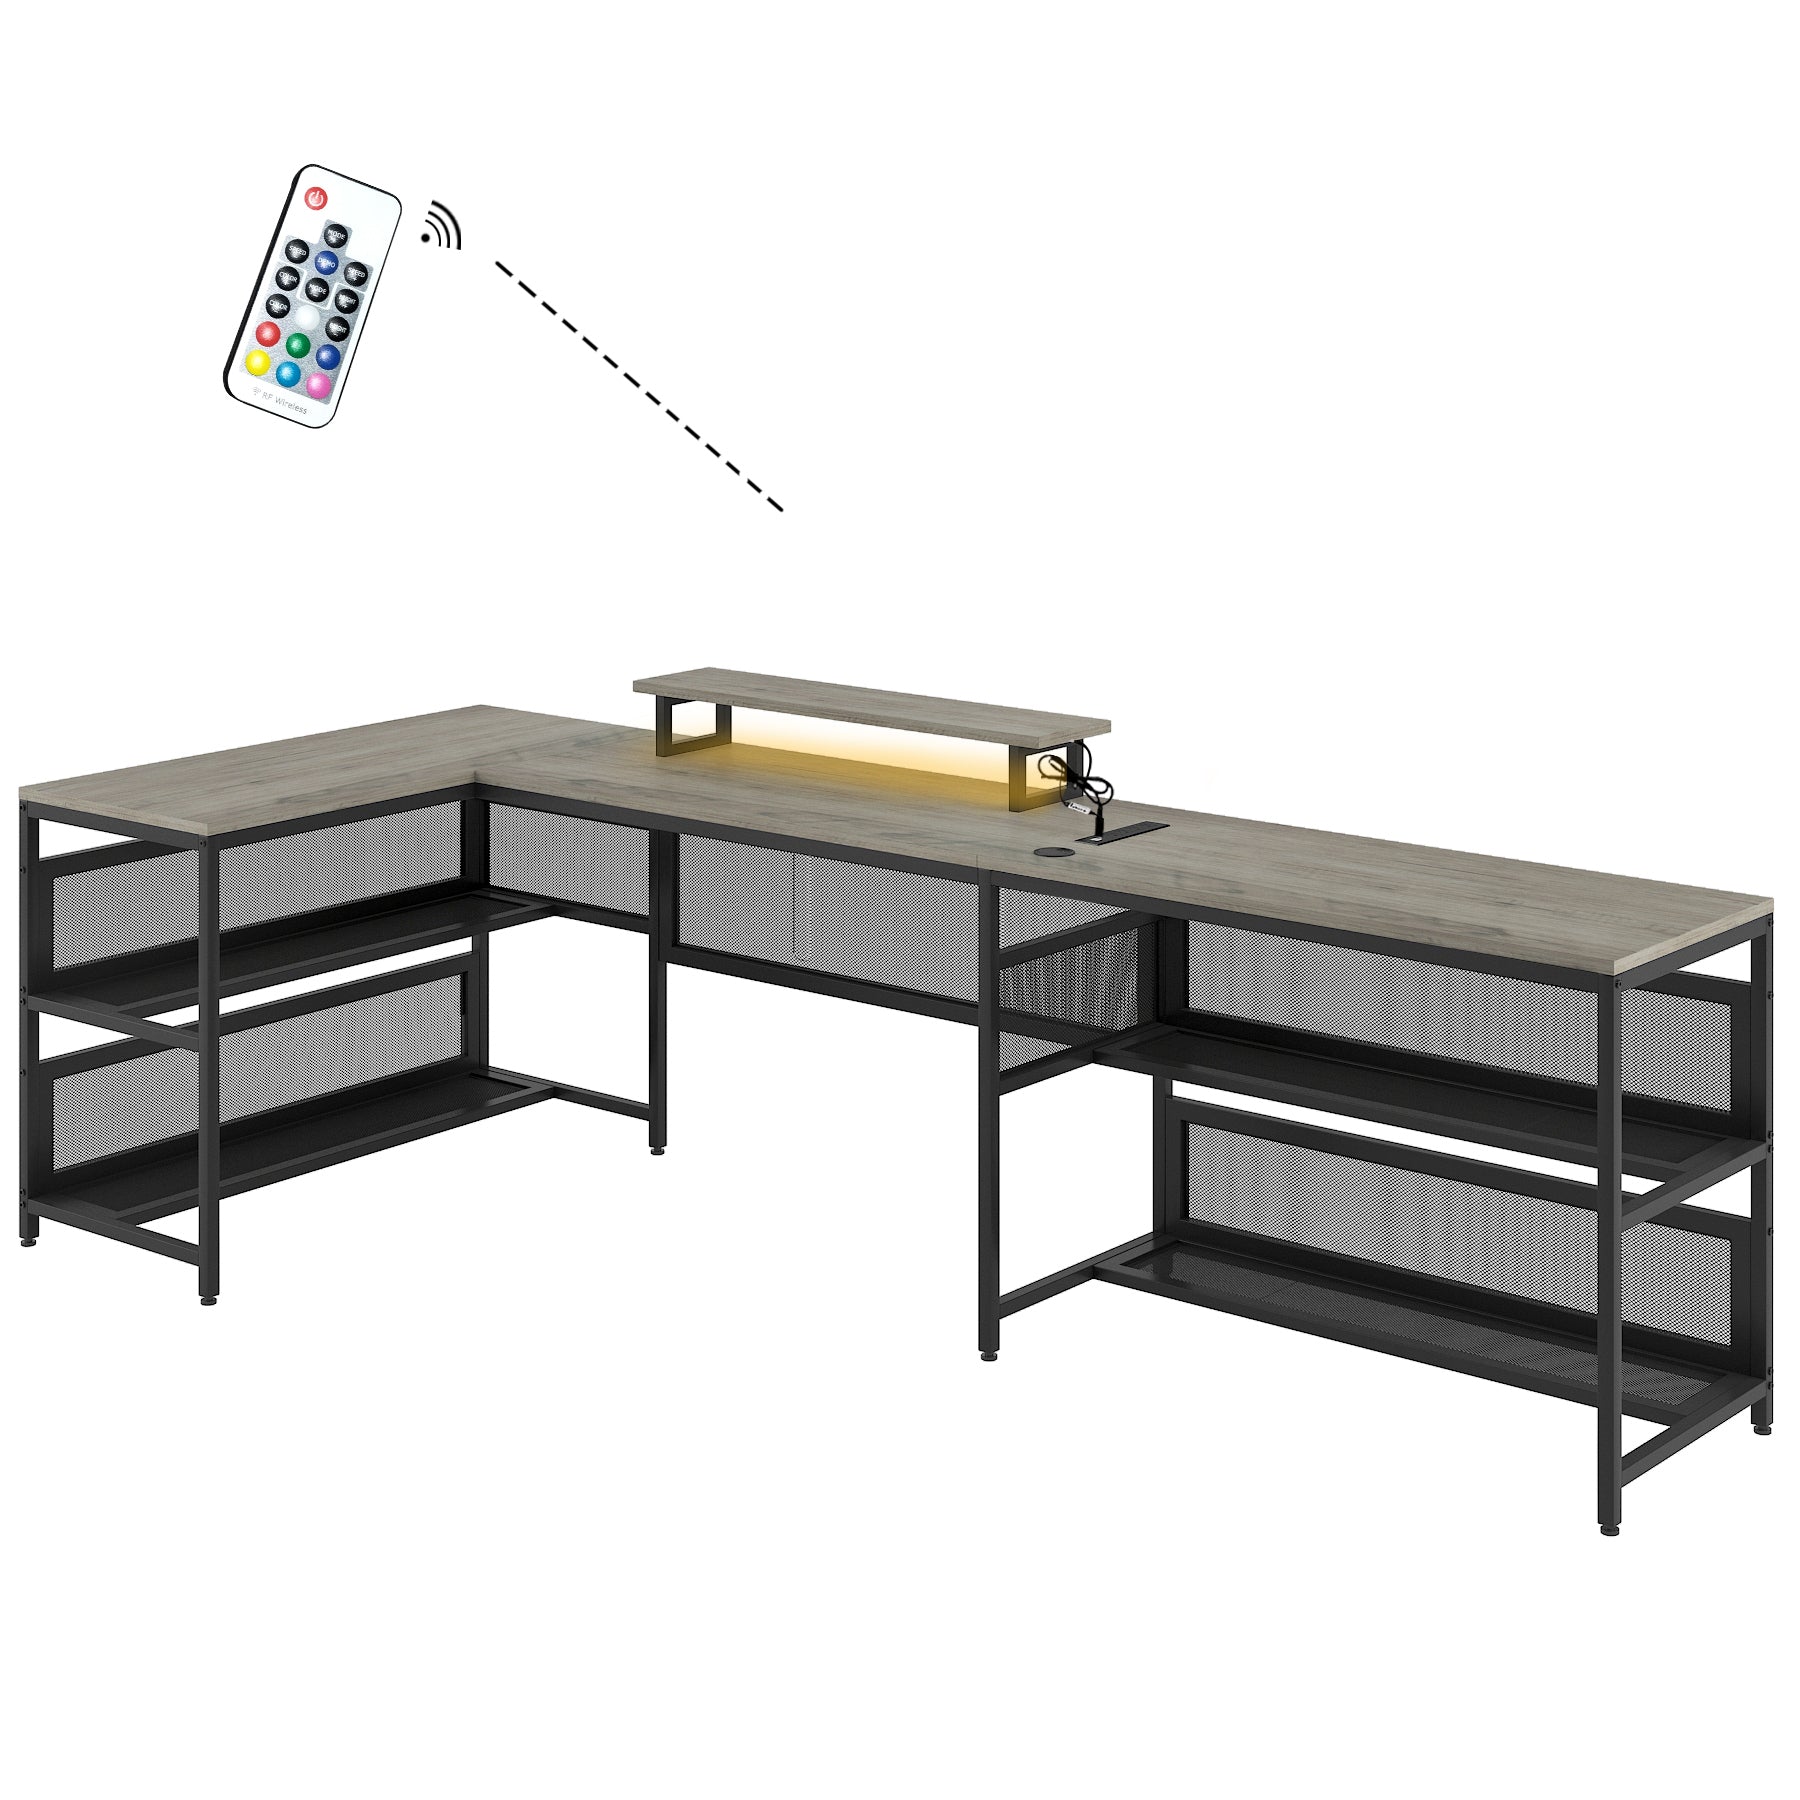 U shaped Desk with Shelve and LED lights gray-mdf